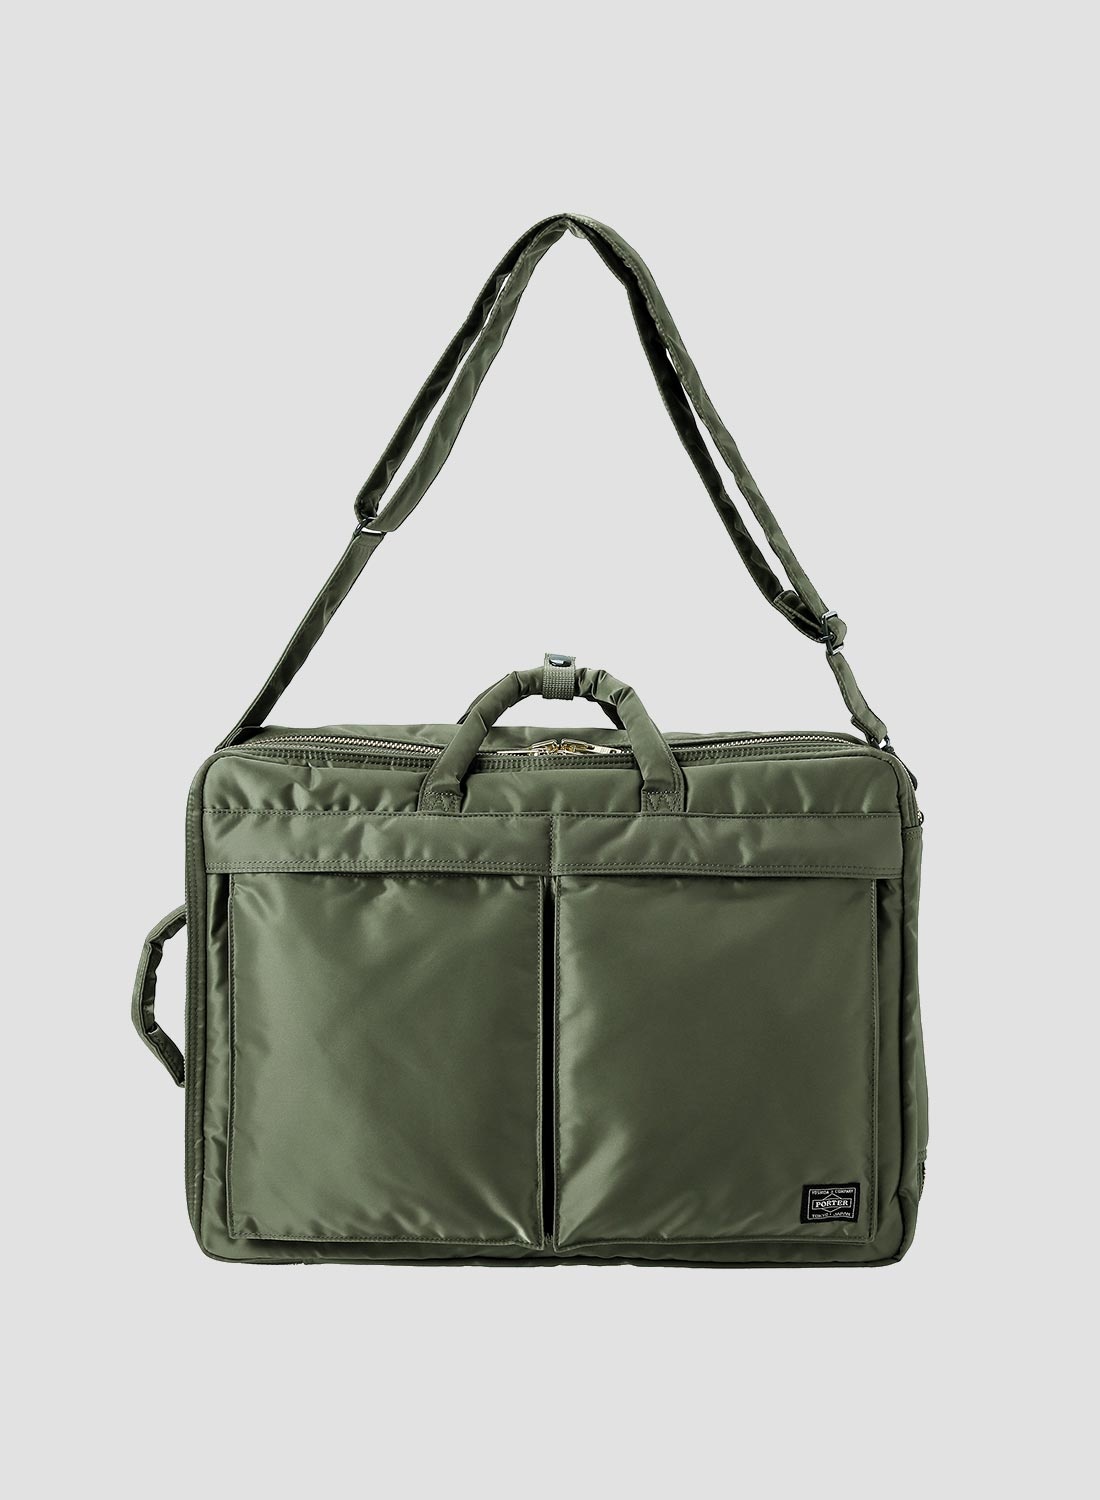 Porter-Yoshida & Co Tanker 3-Way Briefcase in Sage Green - 3